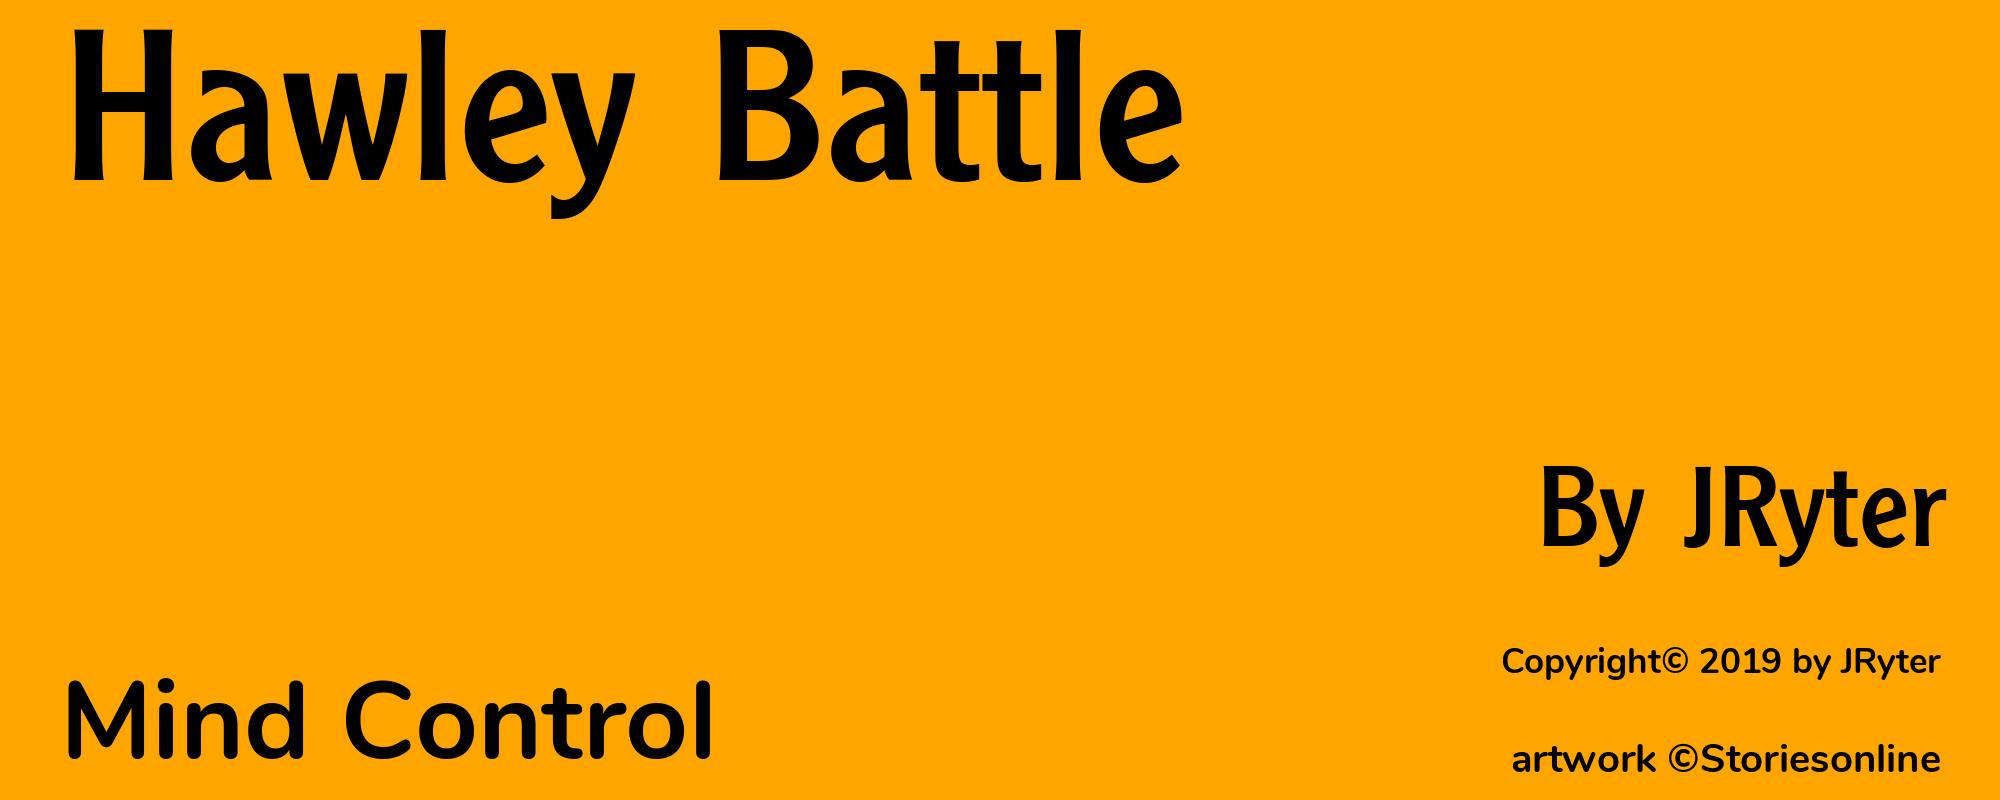 Hawley Battle - Cover